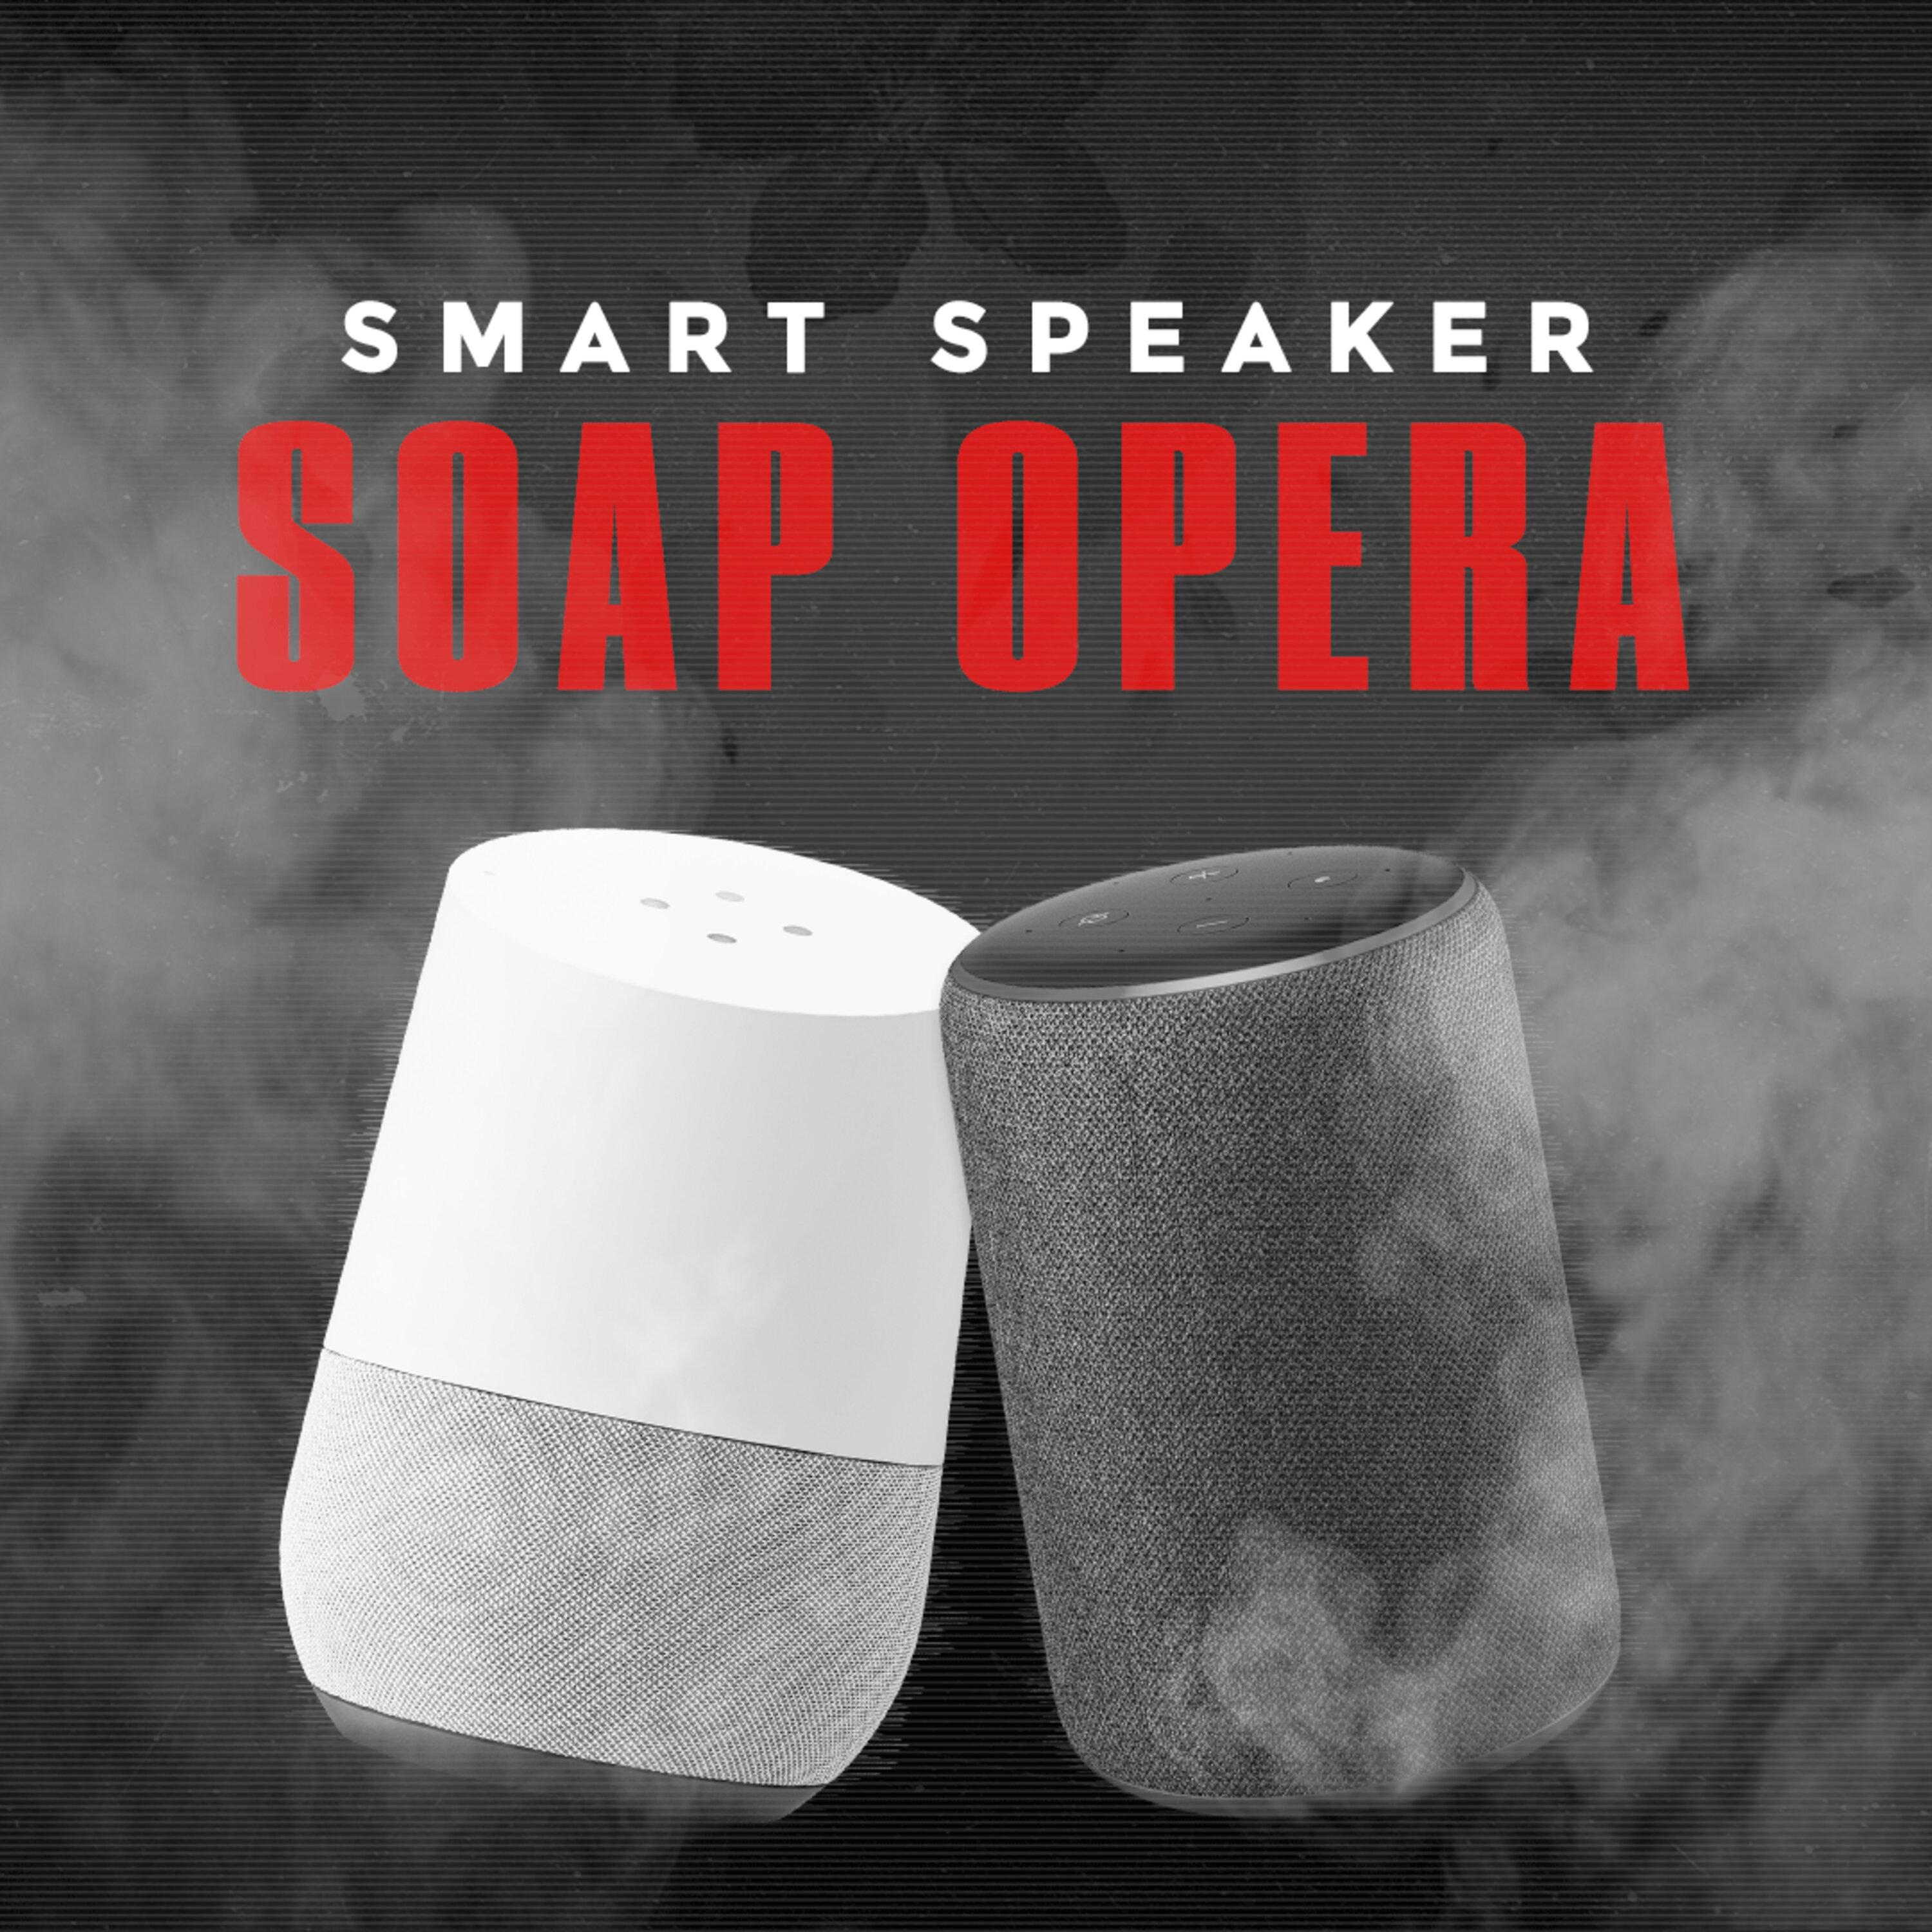 Smart Speaker Soap Opera: Coat time